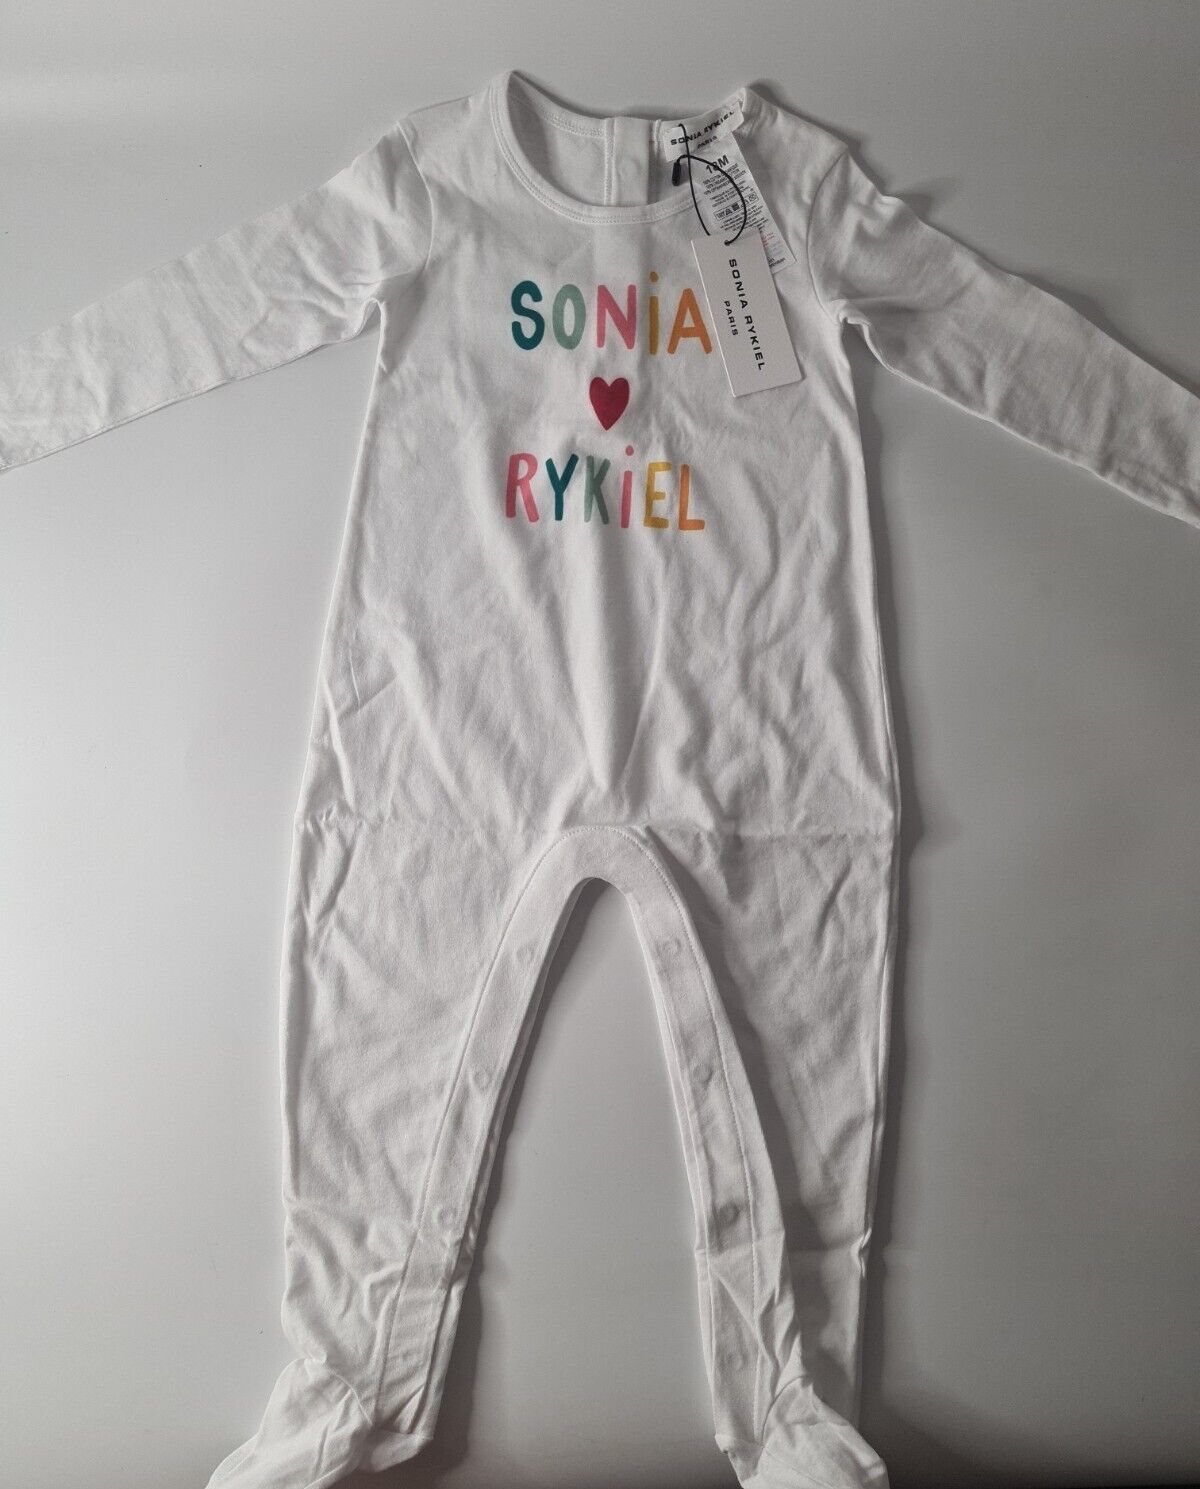 Sonia Rykiel White Marina Baby Grow Sleepsuit Size 6 Months